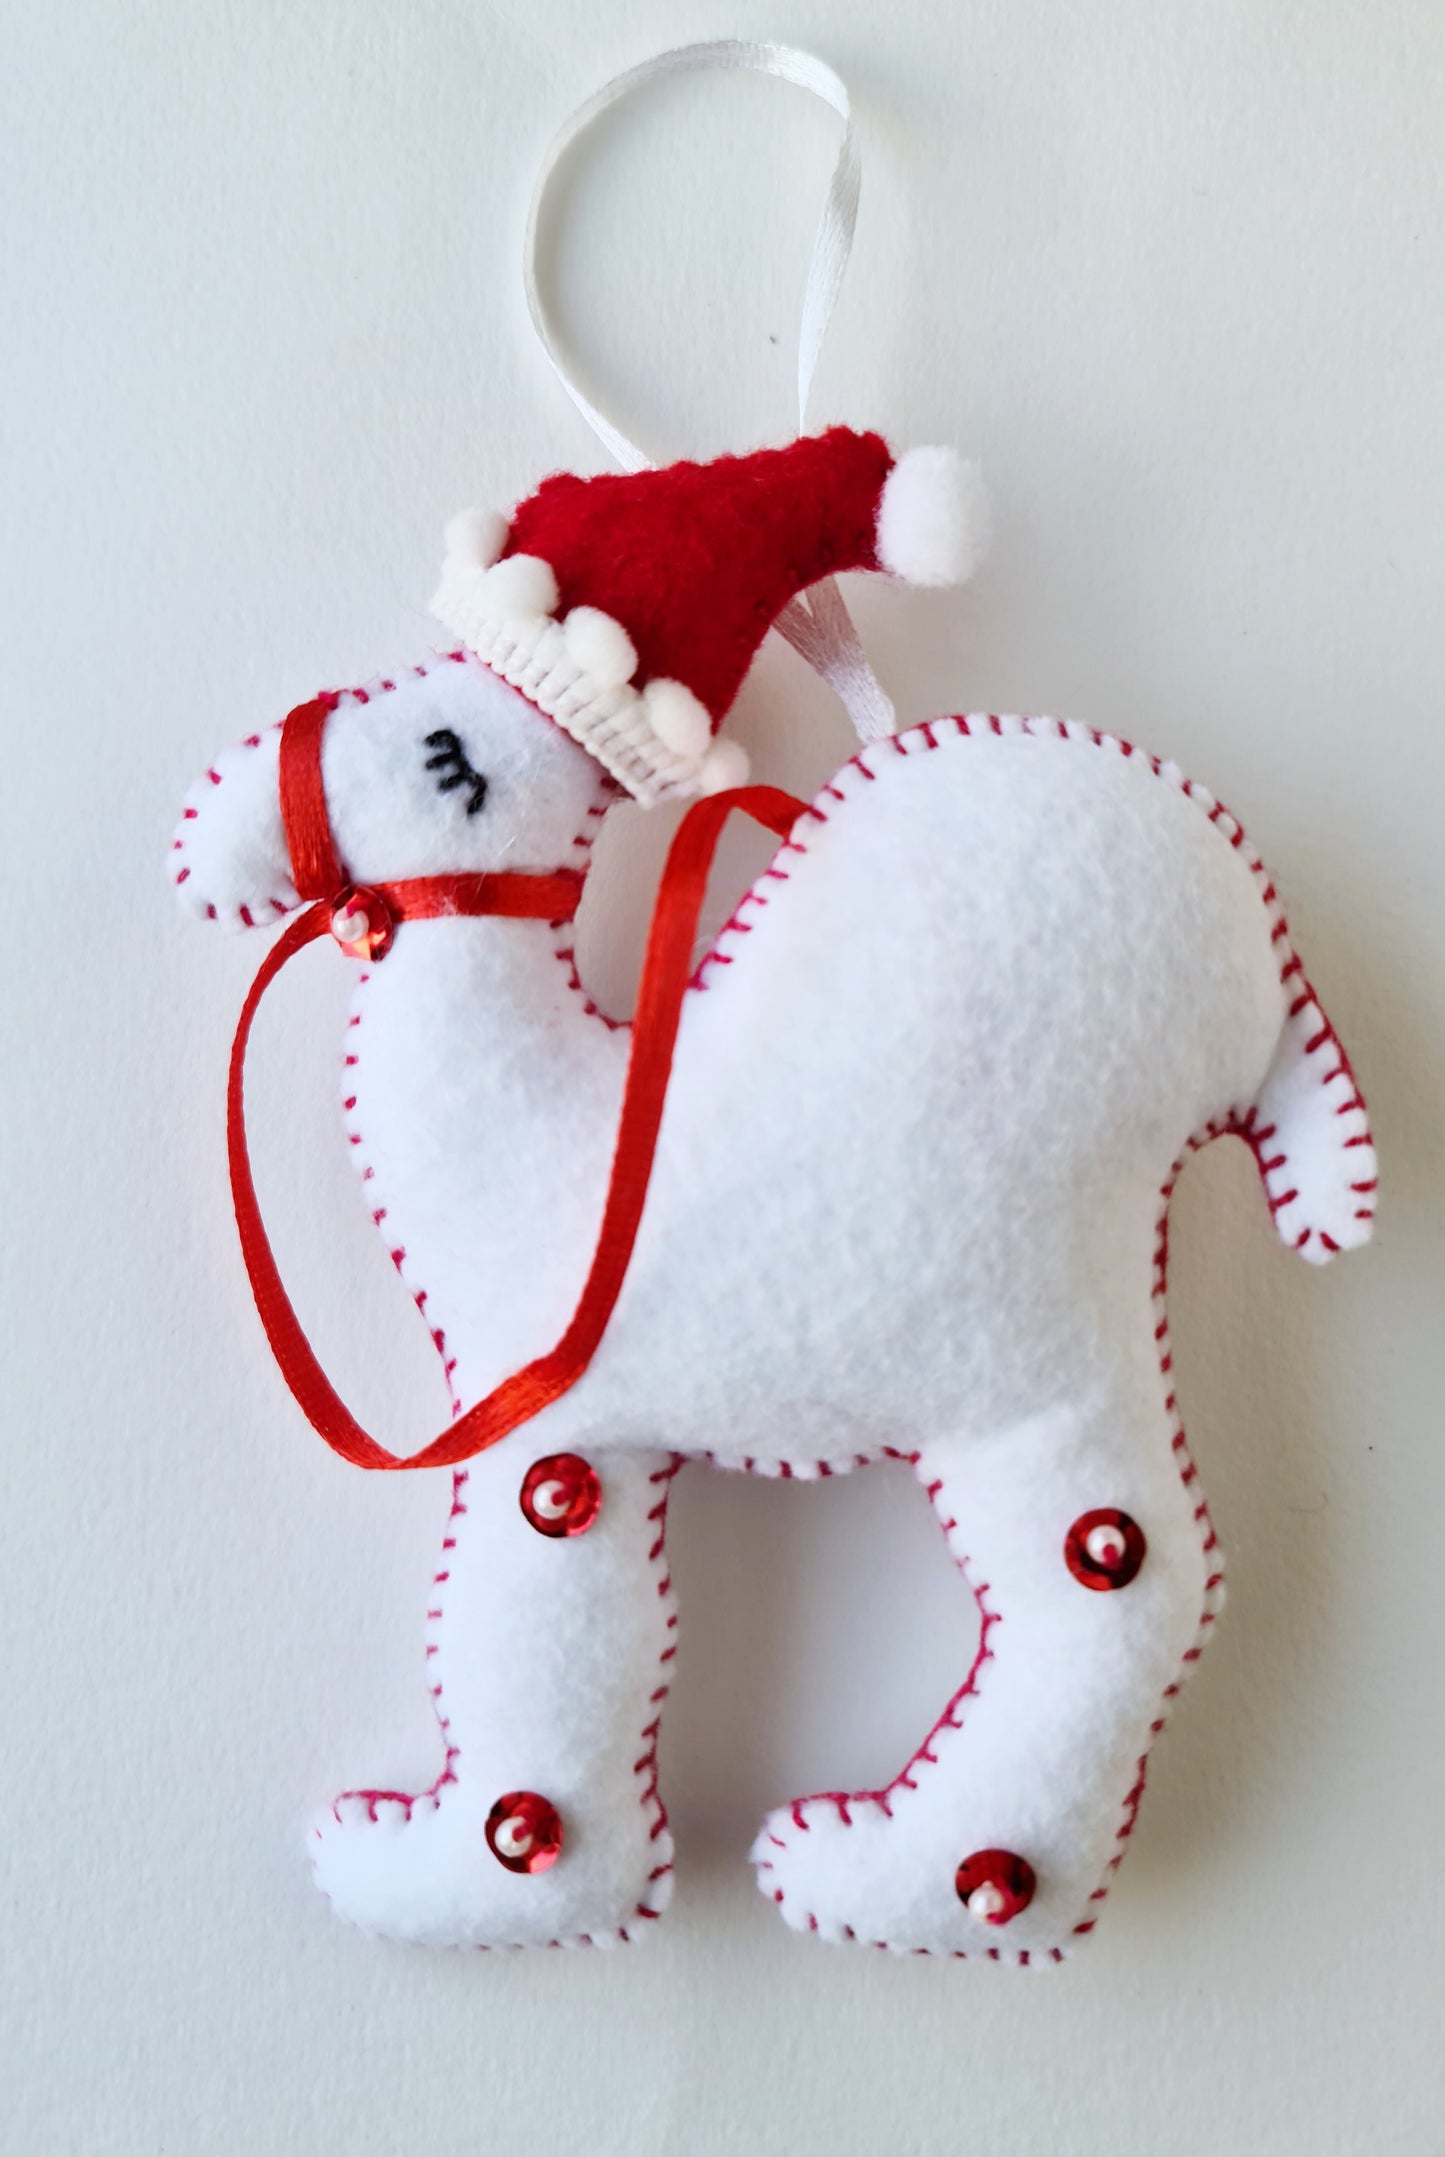 Snow santa hat camel